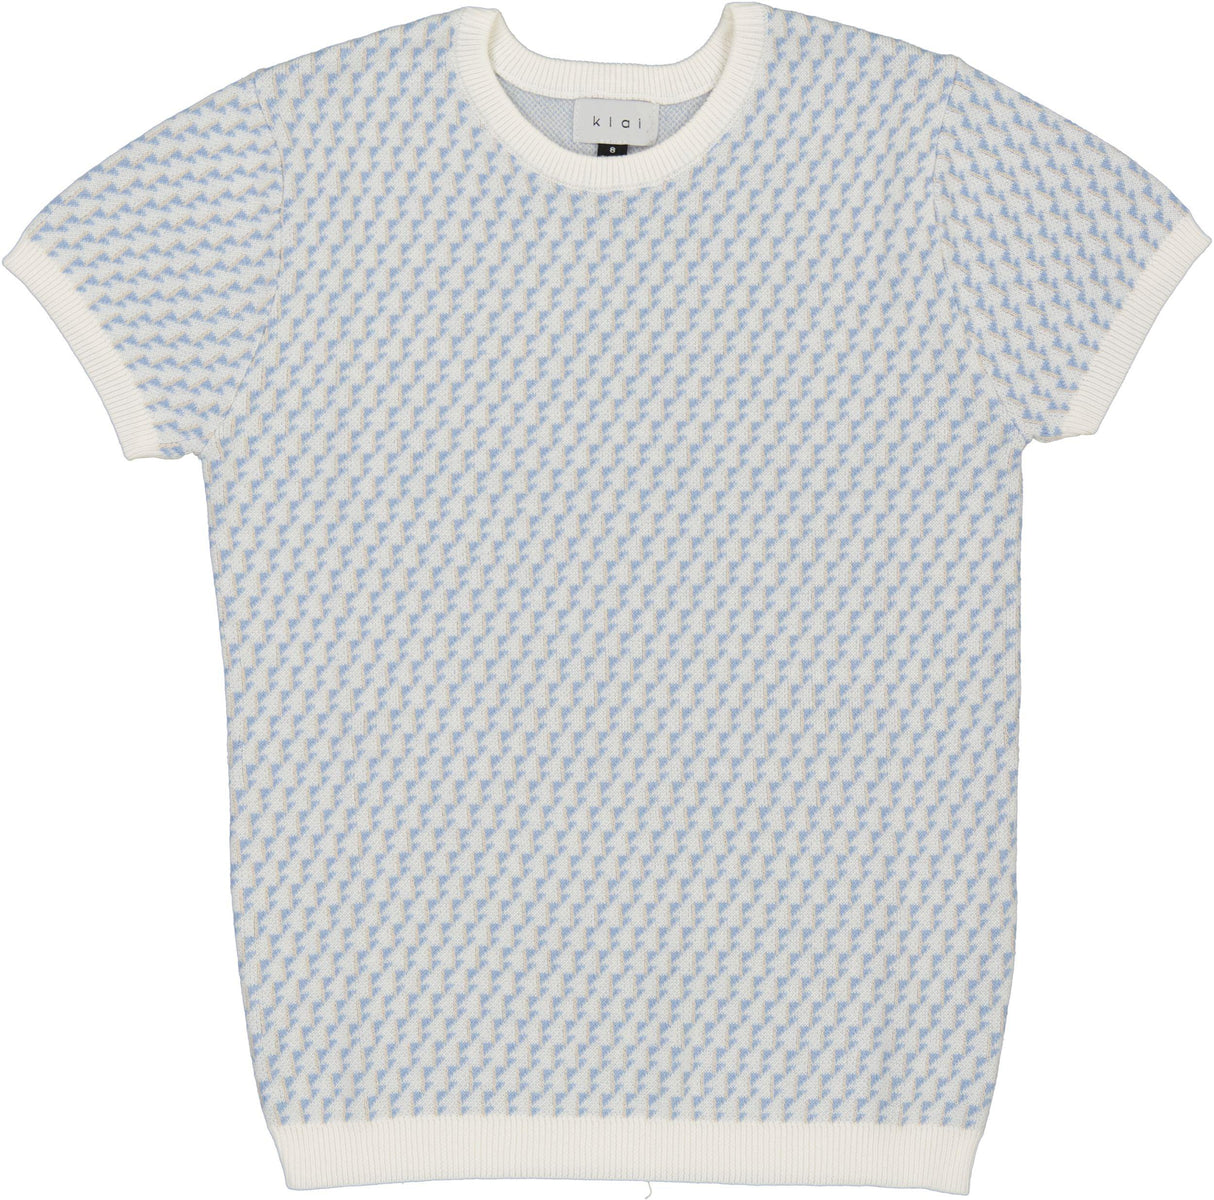 Klai Boys Short Sleeve Geometric Sweater - G2523 – ShirtStop